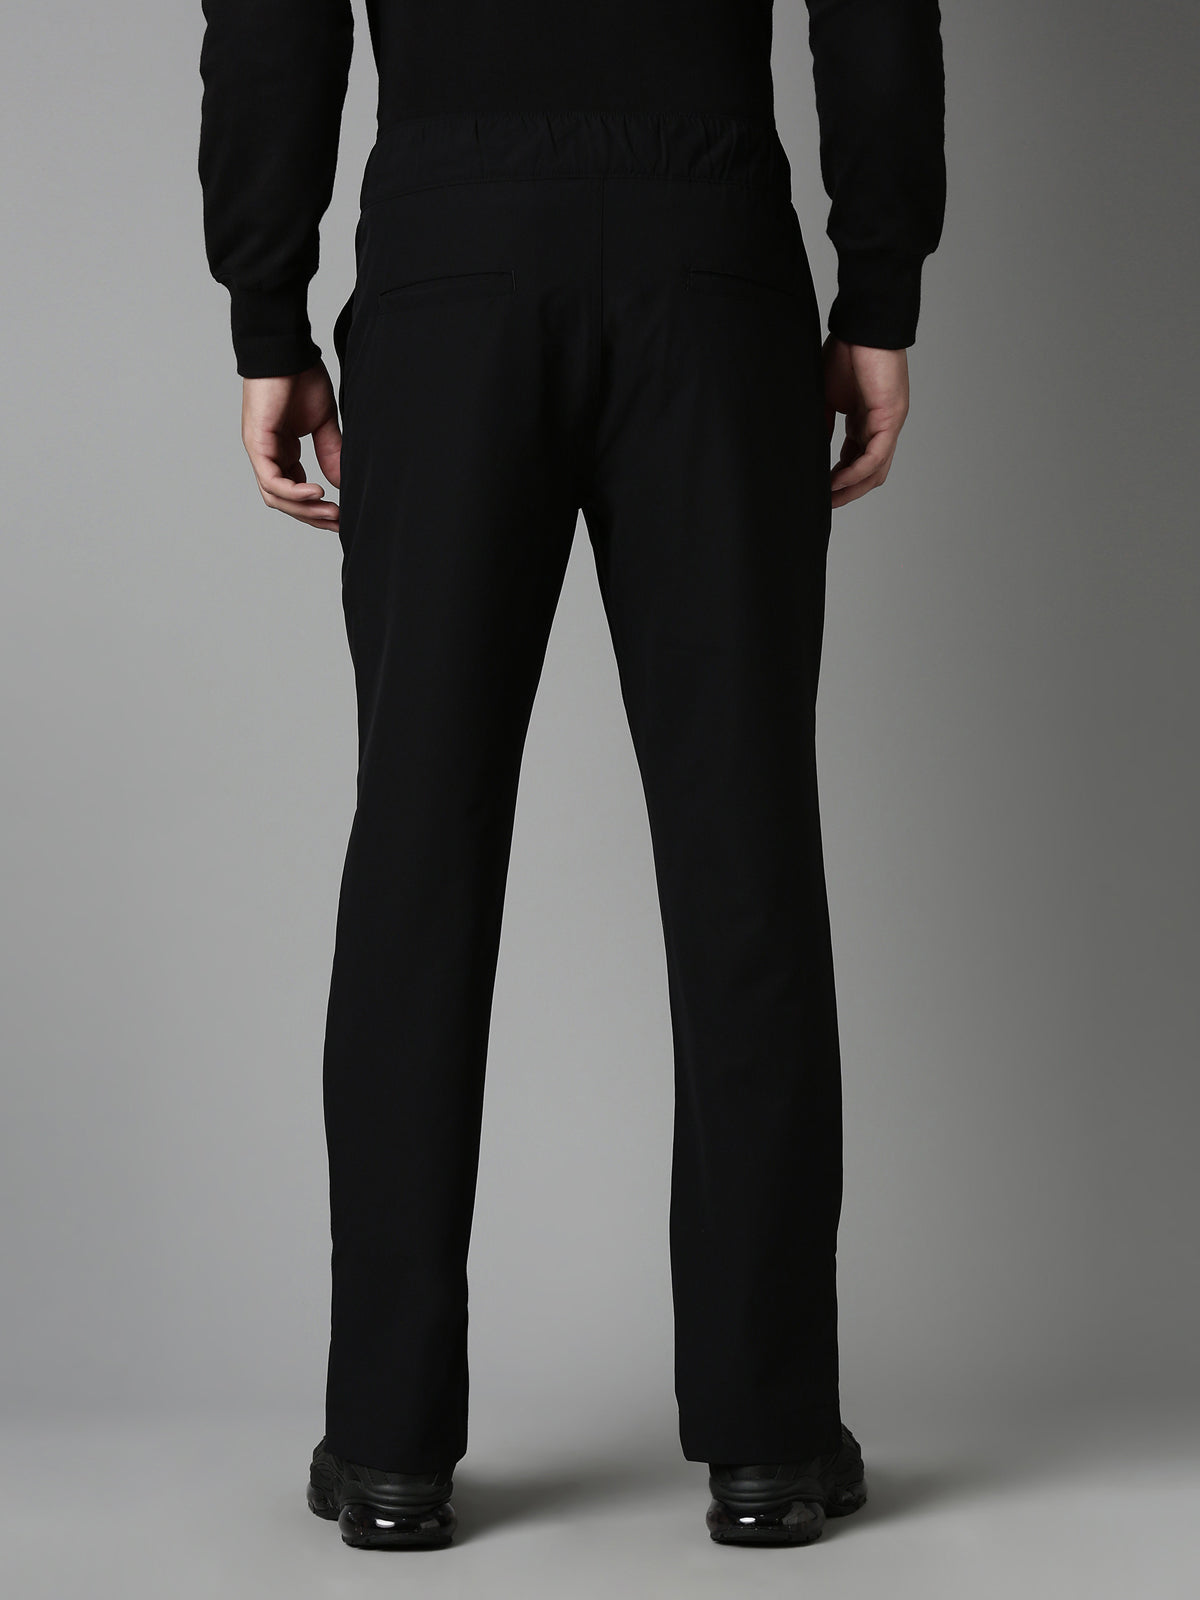 Slim Fit Cotton Black Formal Pant For Men Black Trouser For Men  Dilutee  India